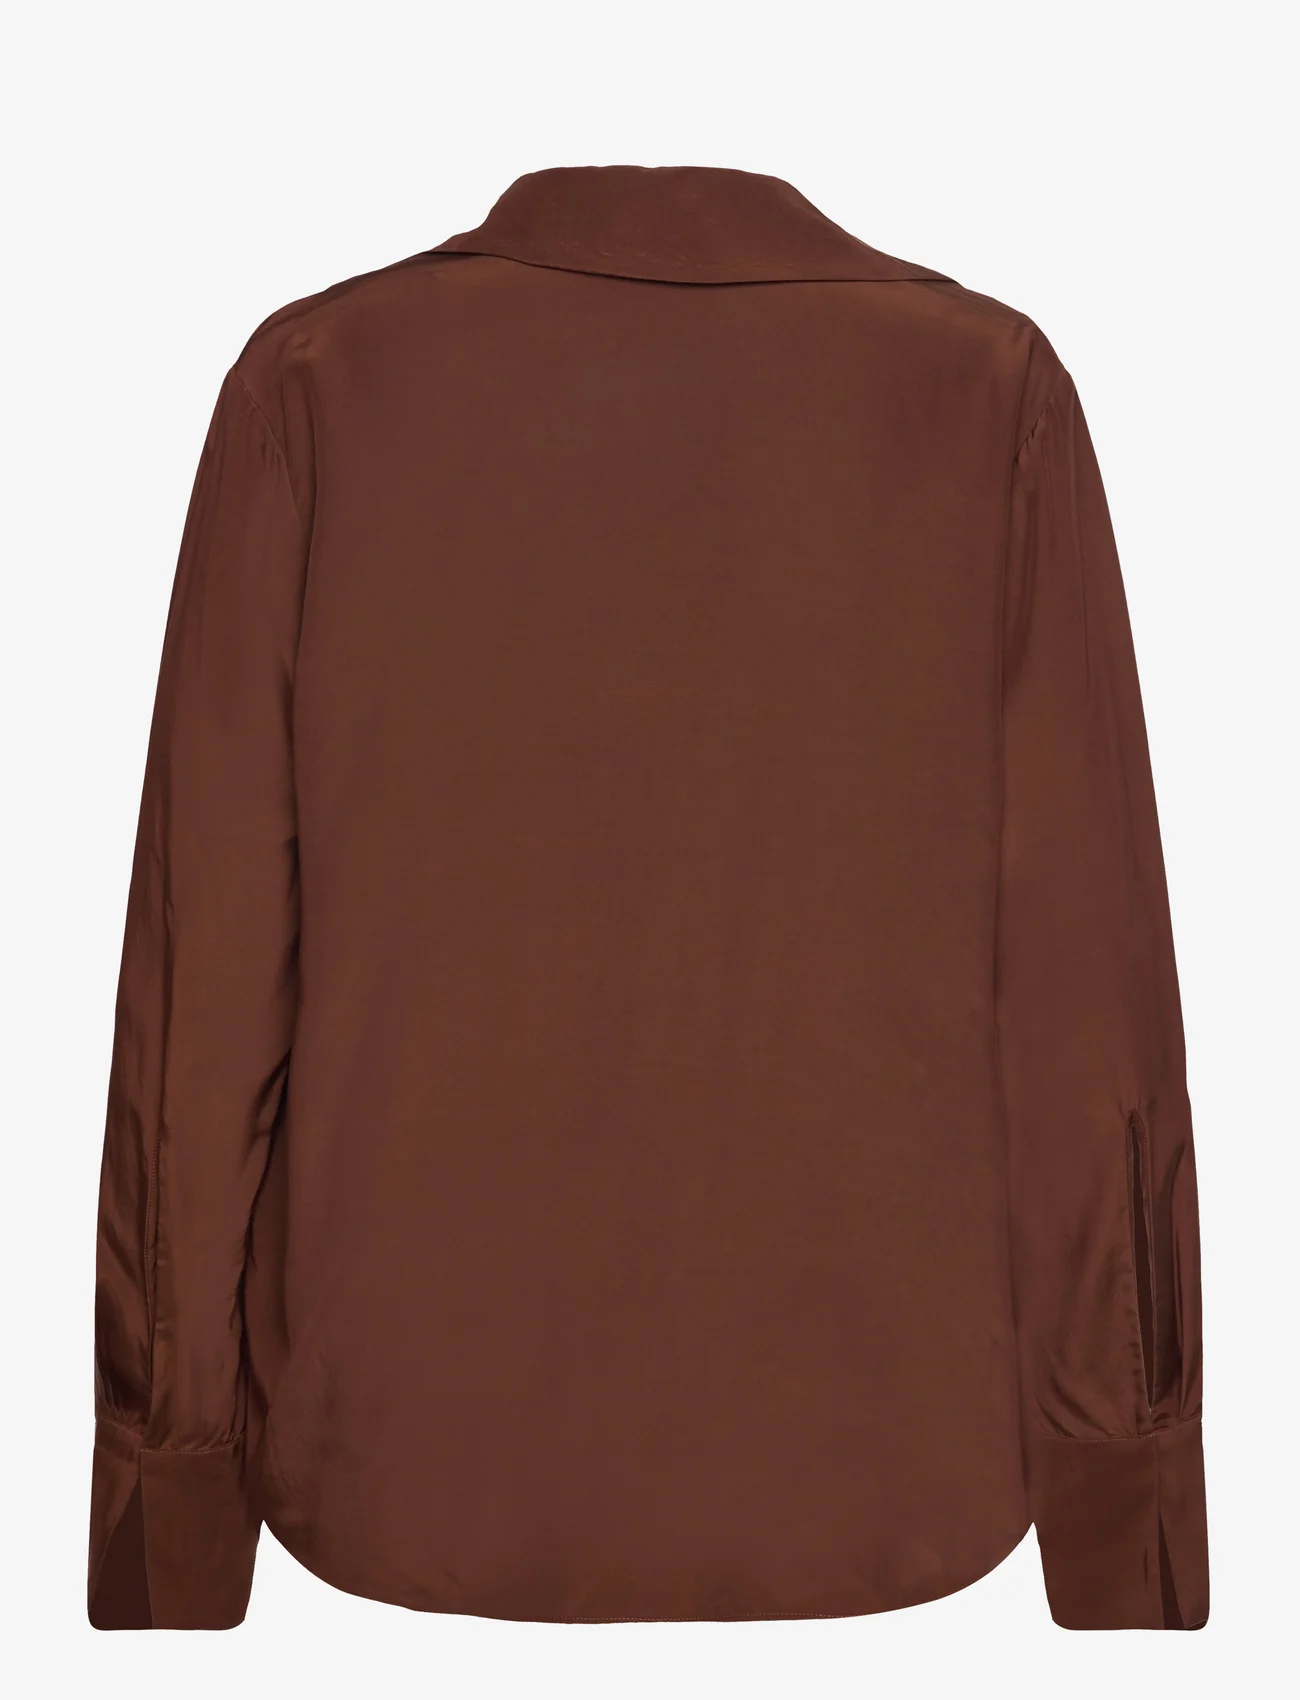 RODEBJER - Rodebjer Clementine - long-sleeved blouses - dark brown - 1